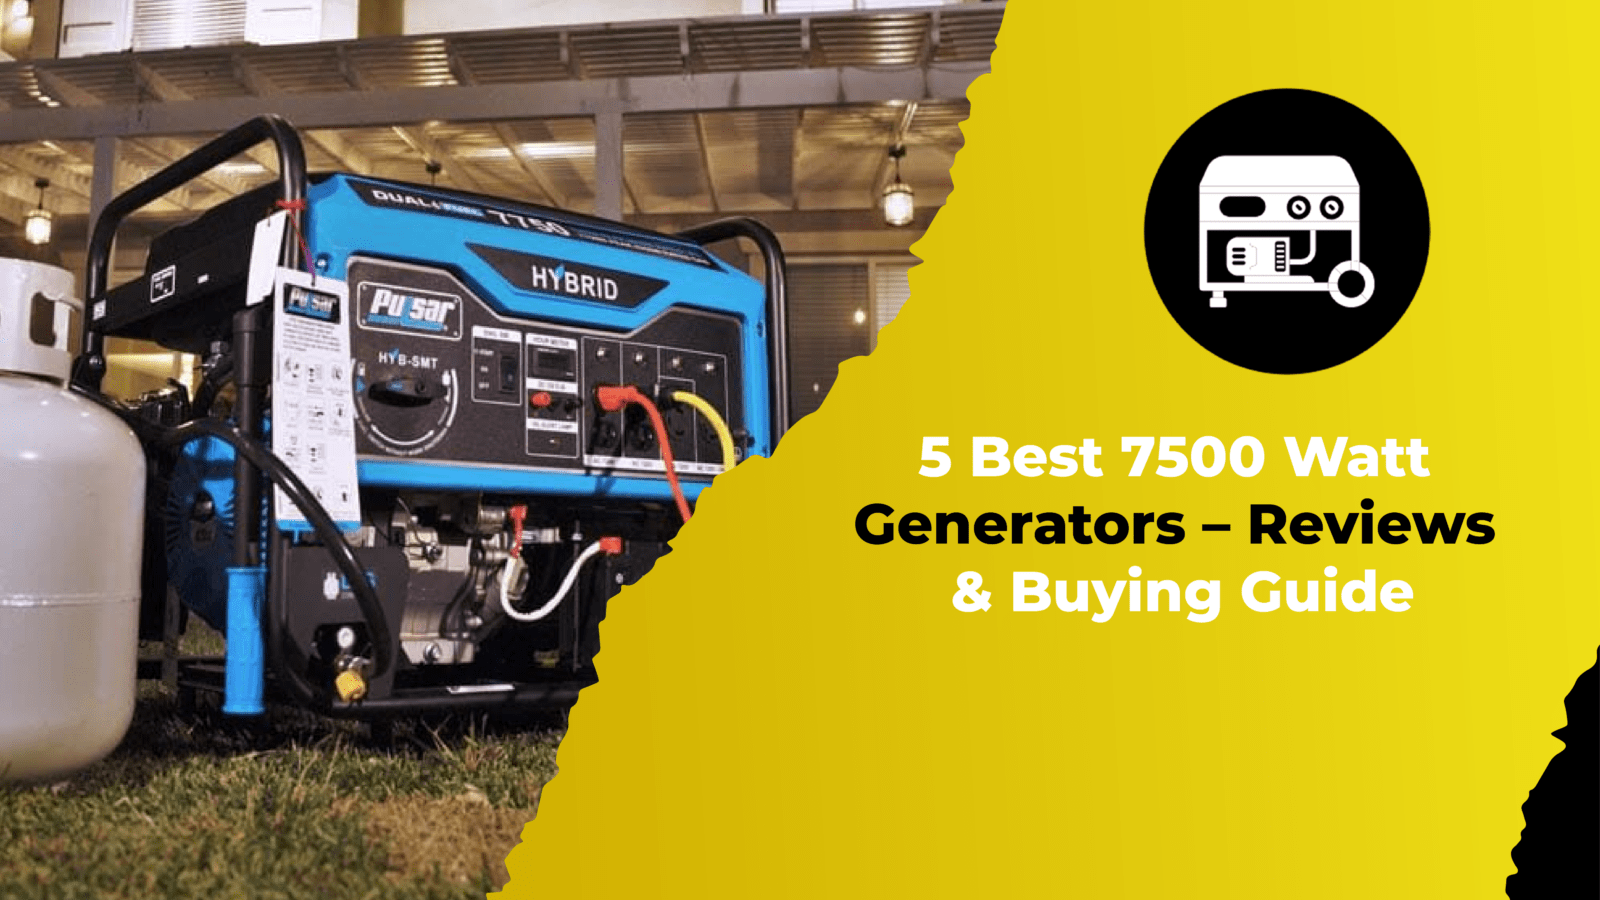 5 Best 7500 Watt Generators – Reviews & Buying Guide